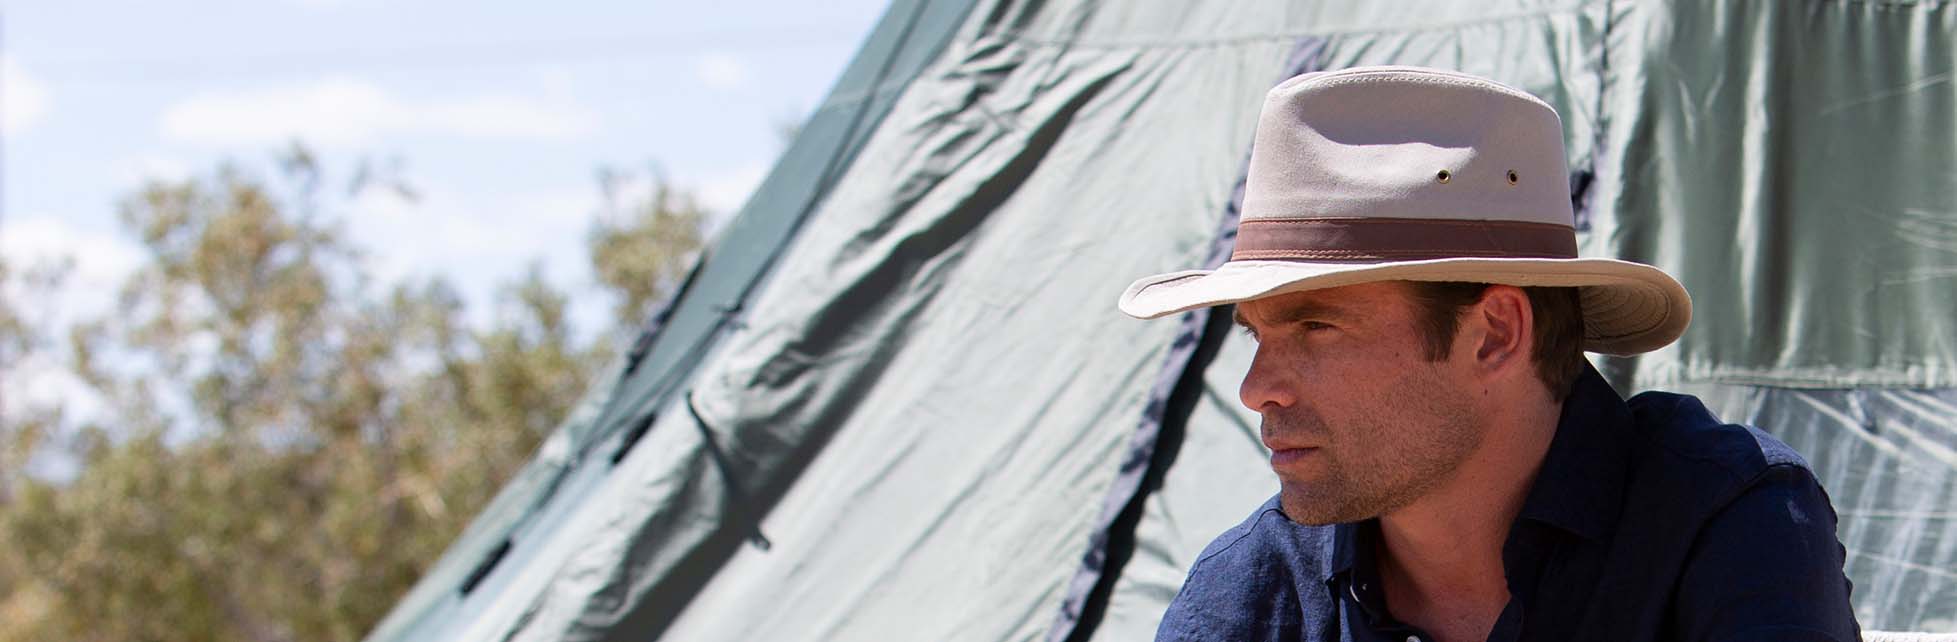 Camping Hats – Tenth Street Hats